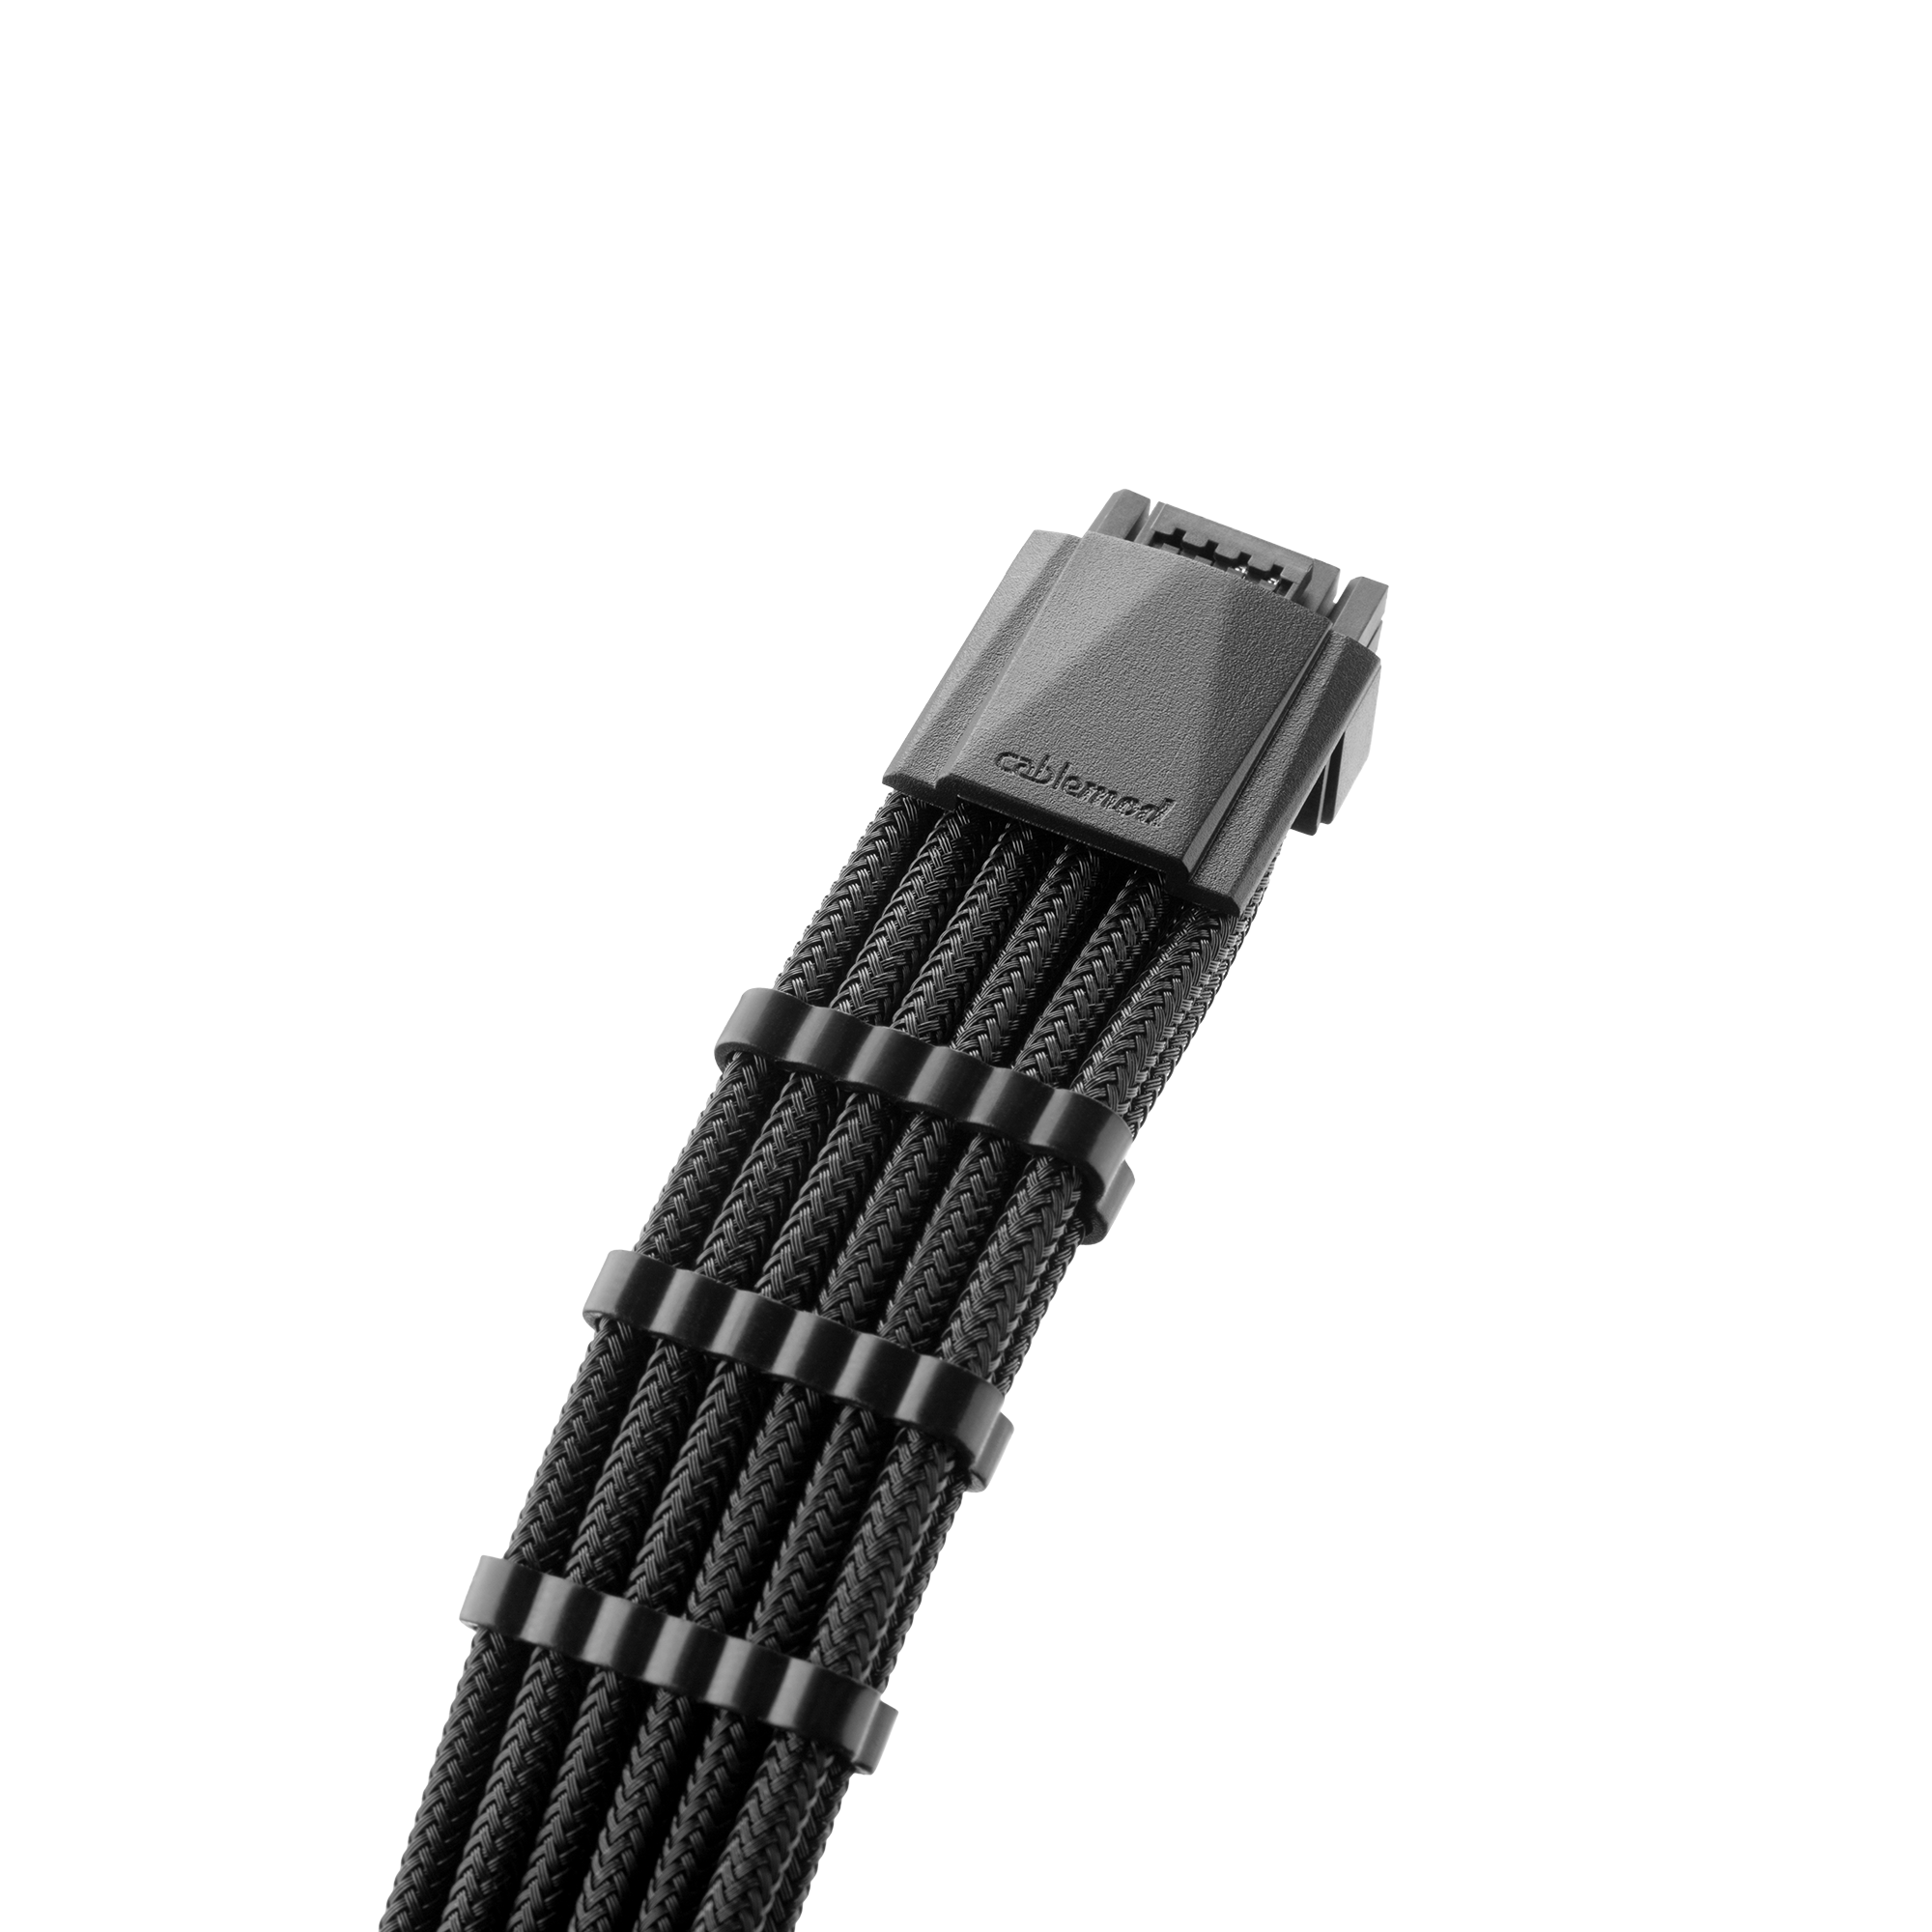 CableMod - CableMod Pro ModMesh 12VHPWR Cable Extension Kit (Black)